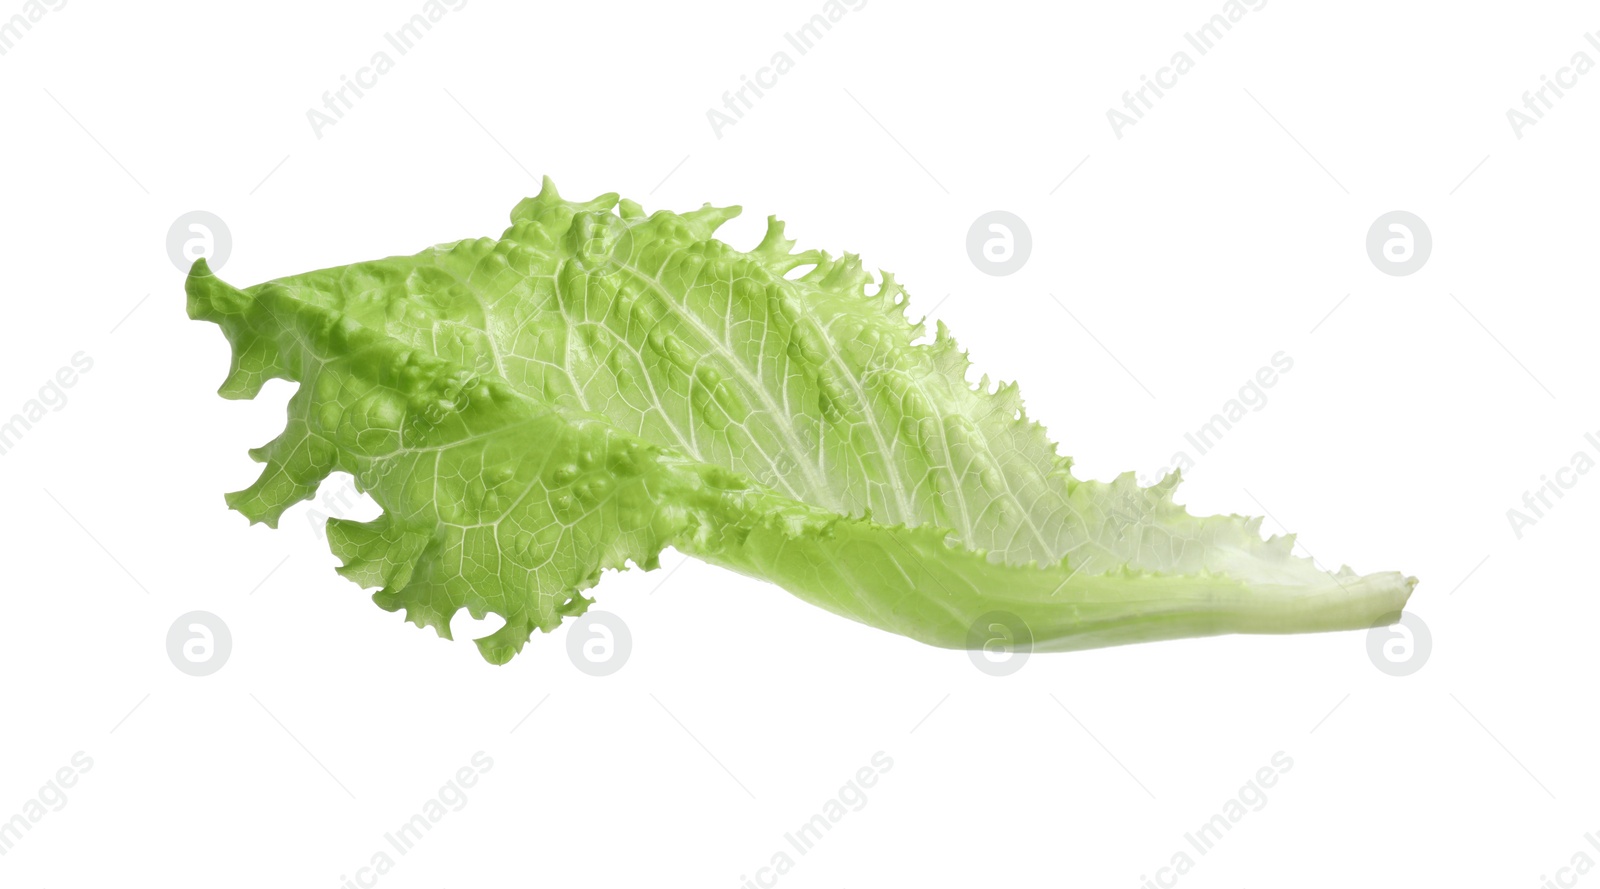 Photo of Fresh green lettuce leaf isolated on white